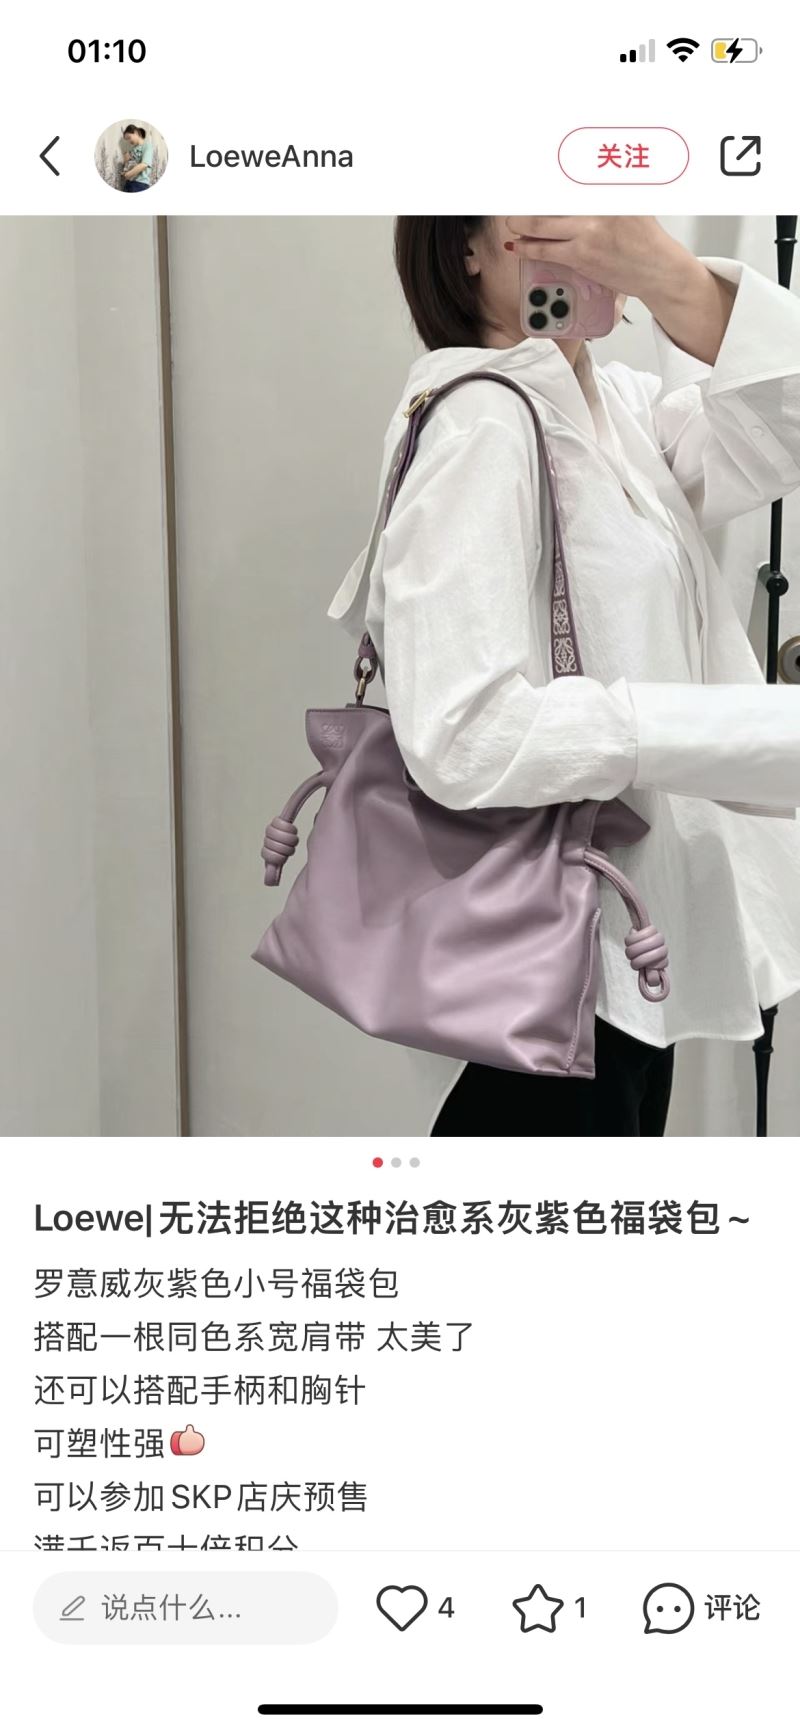 Loewe Flamenco Bags